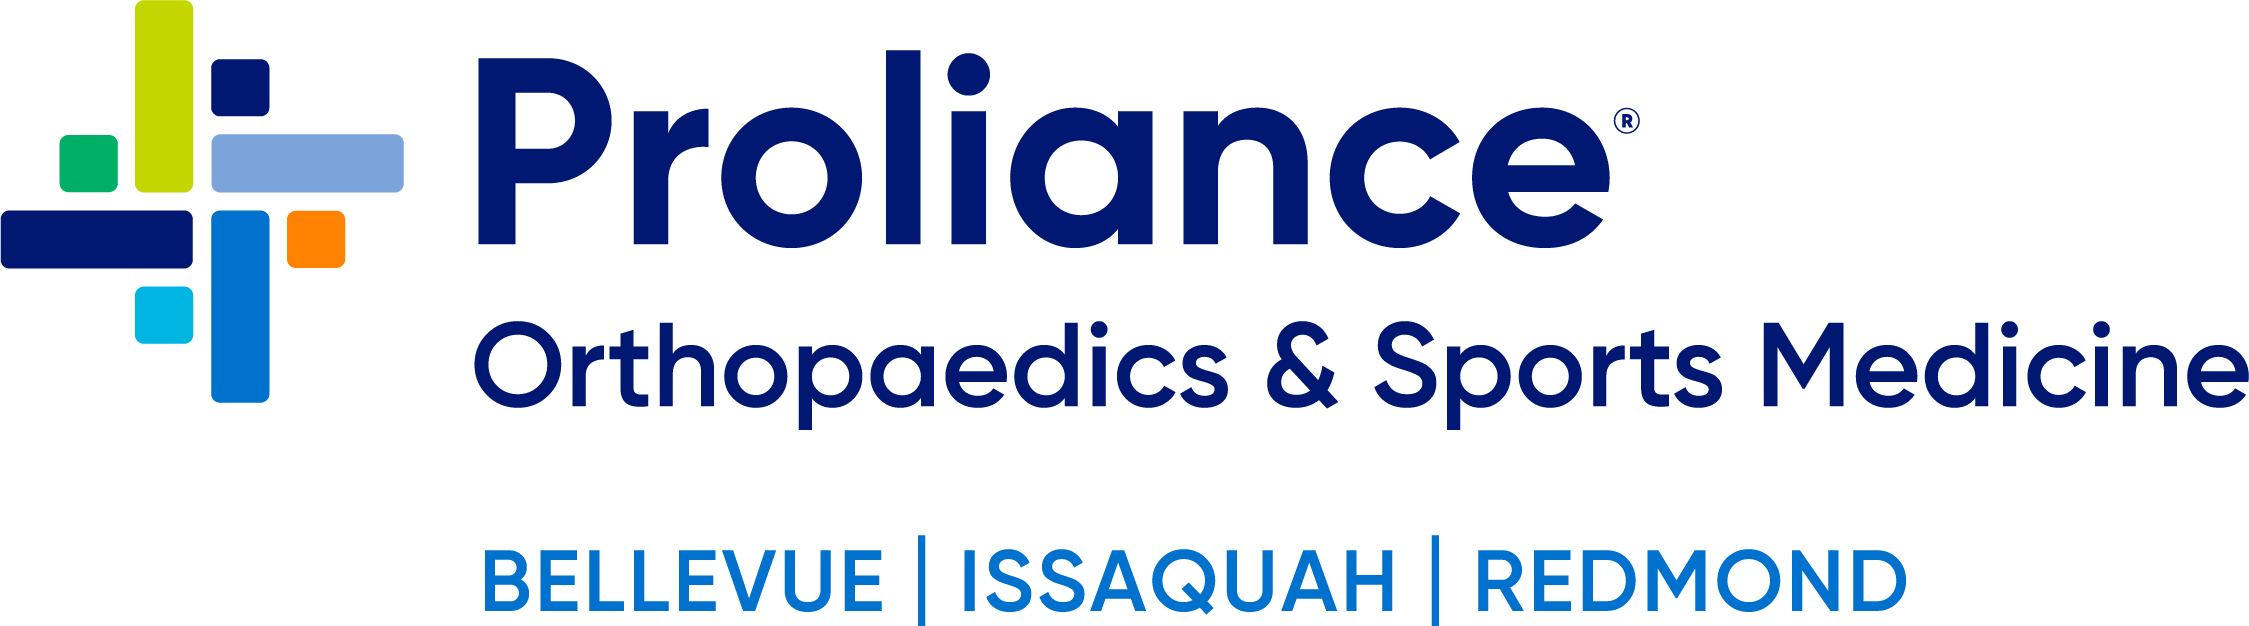 Proliance Orthopaedics & Sports Medicine New Logo